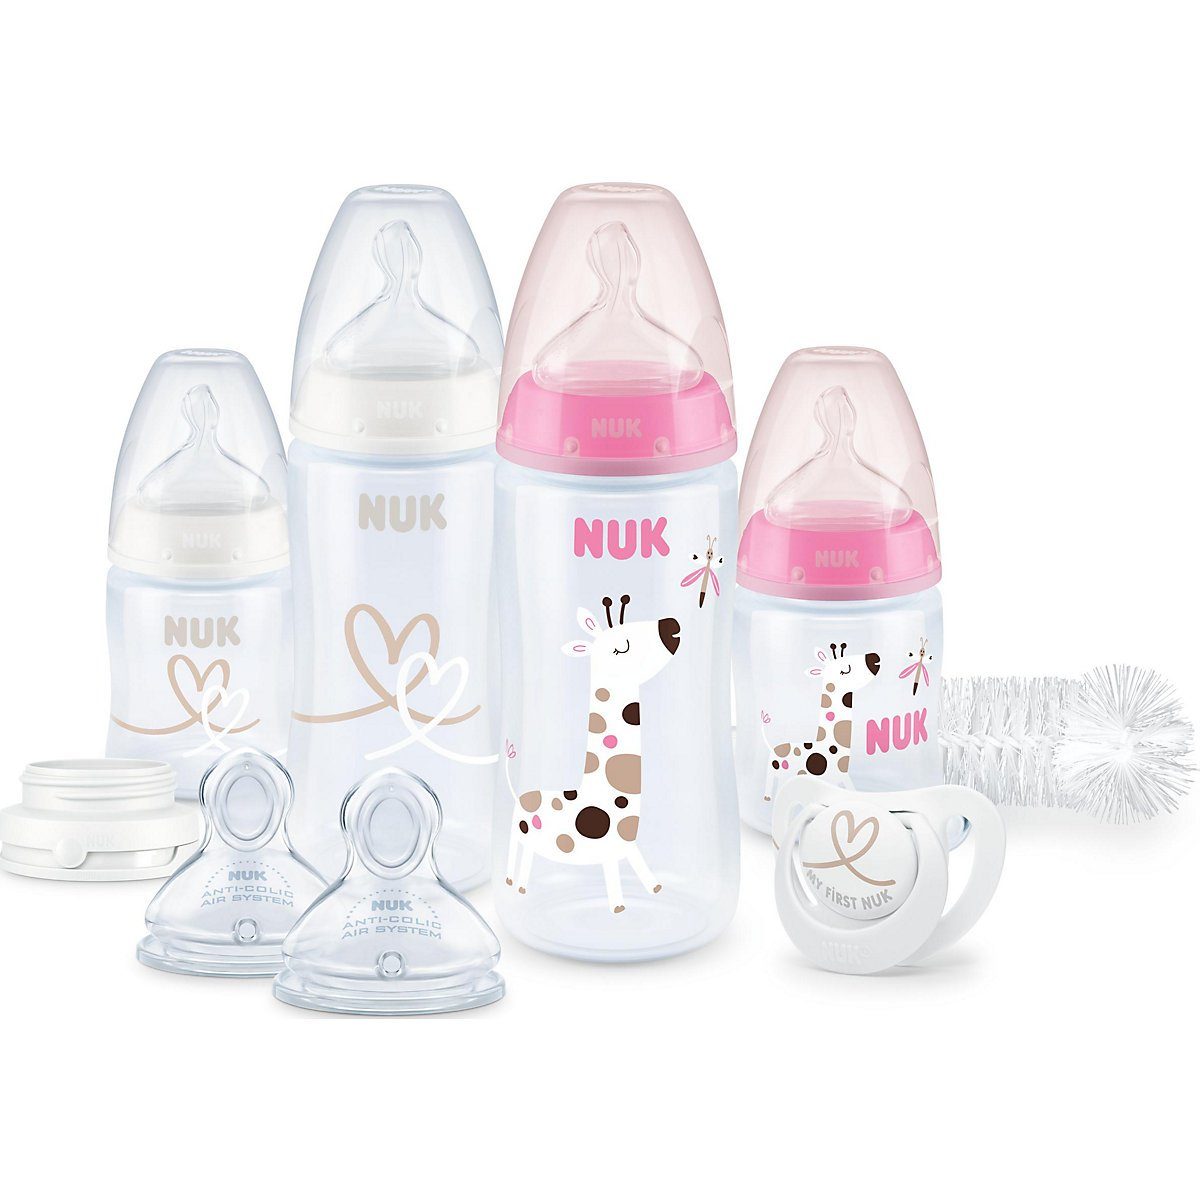 NUK Nuk first choice glasflasche Babyflasche Flasche set 